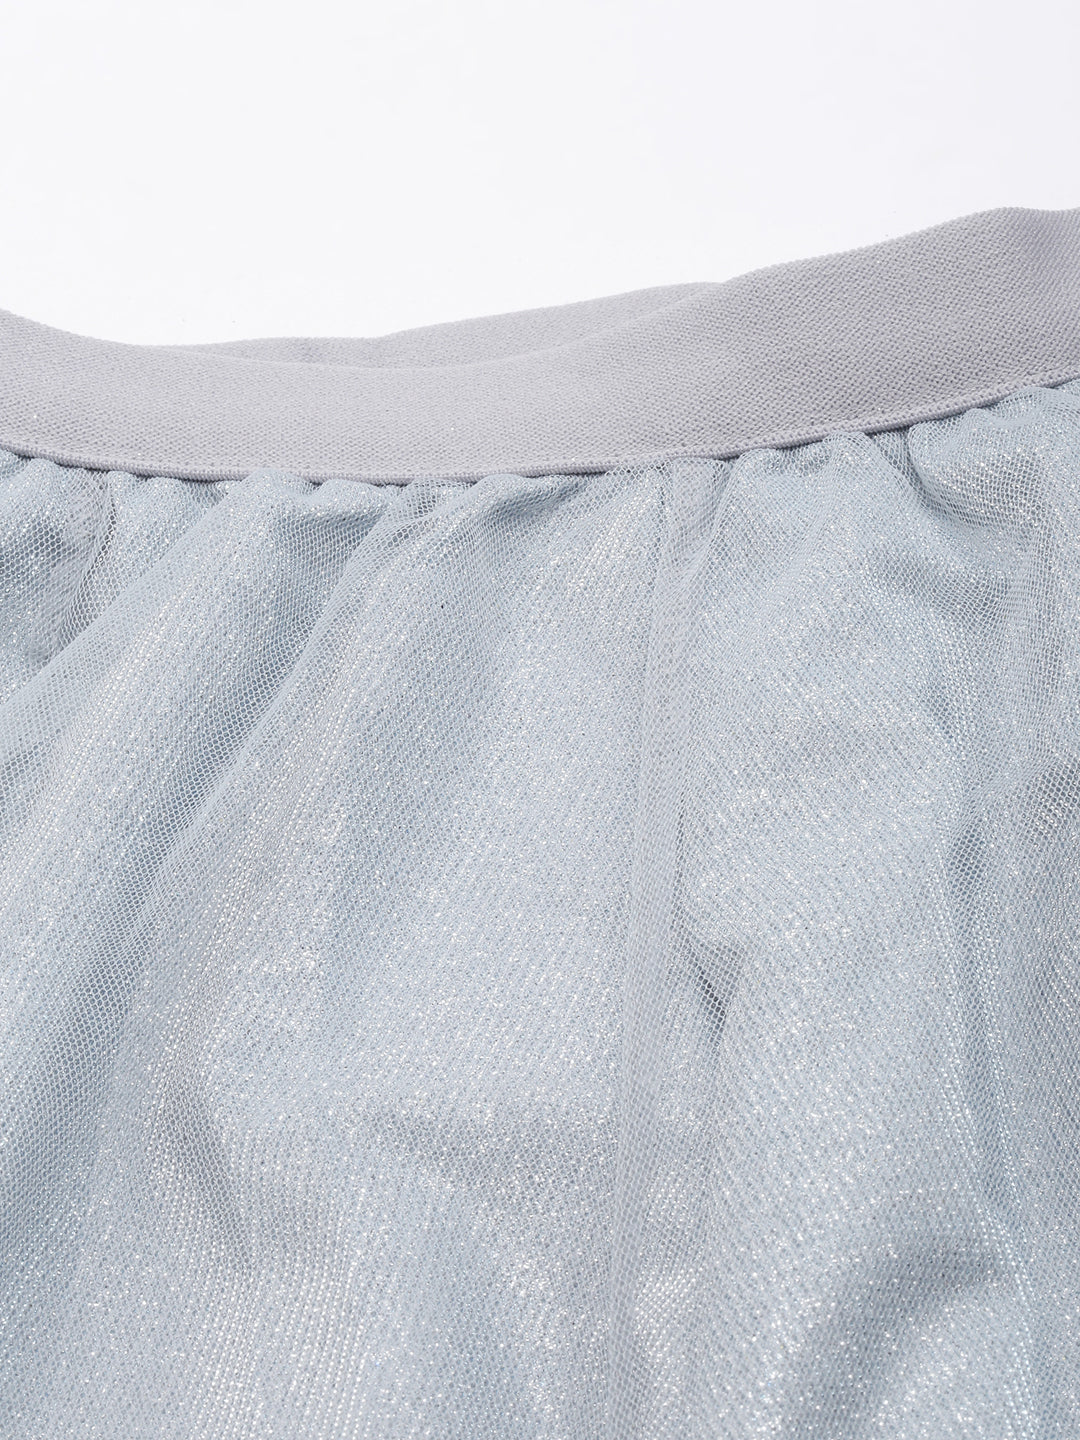 Women Solid Grey Flared Midi Sheer Skirt